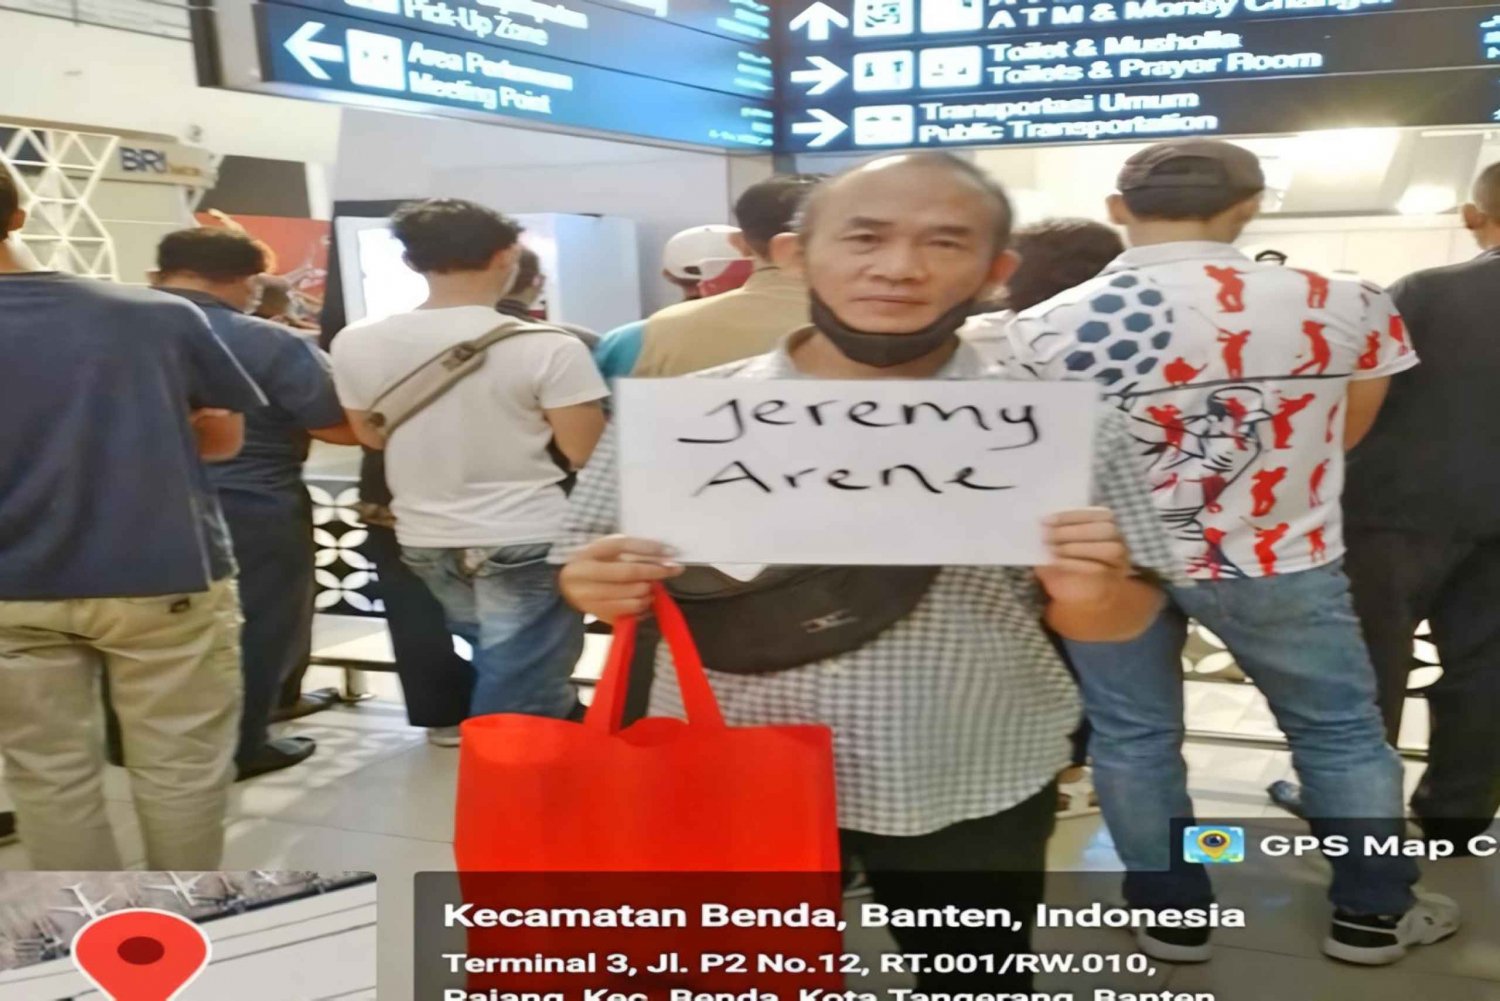 De l'aéroport international Soekarno Hatta ( CGK ) à la ville de Jakarta